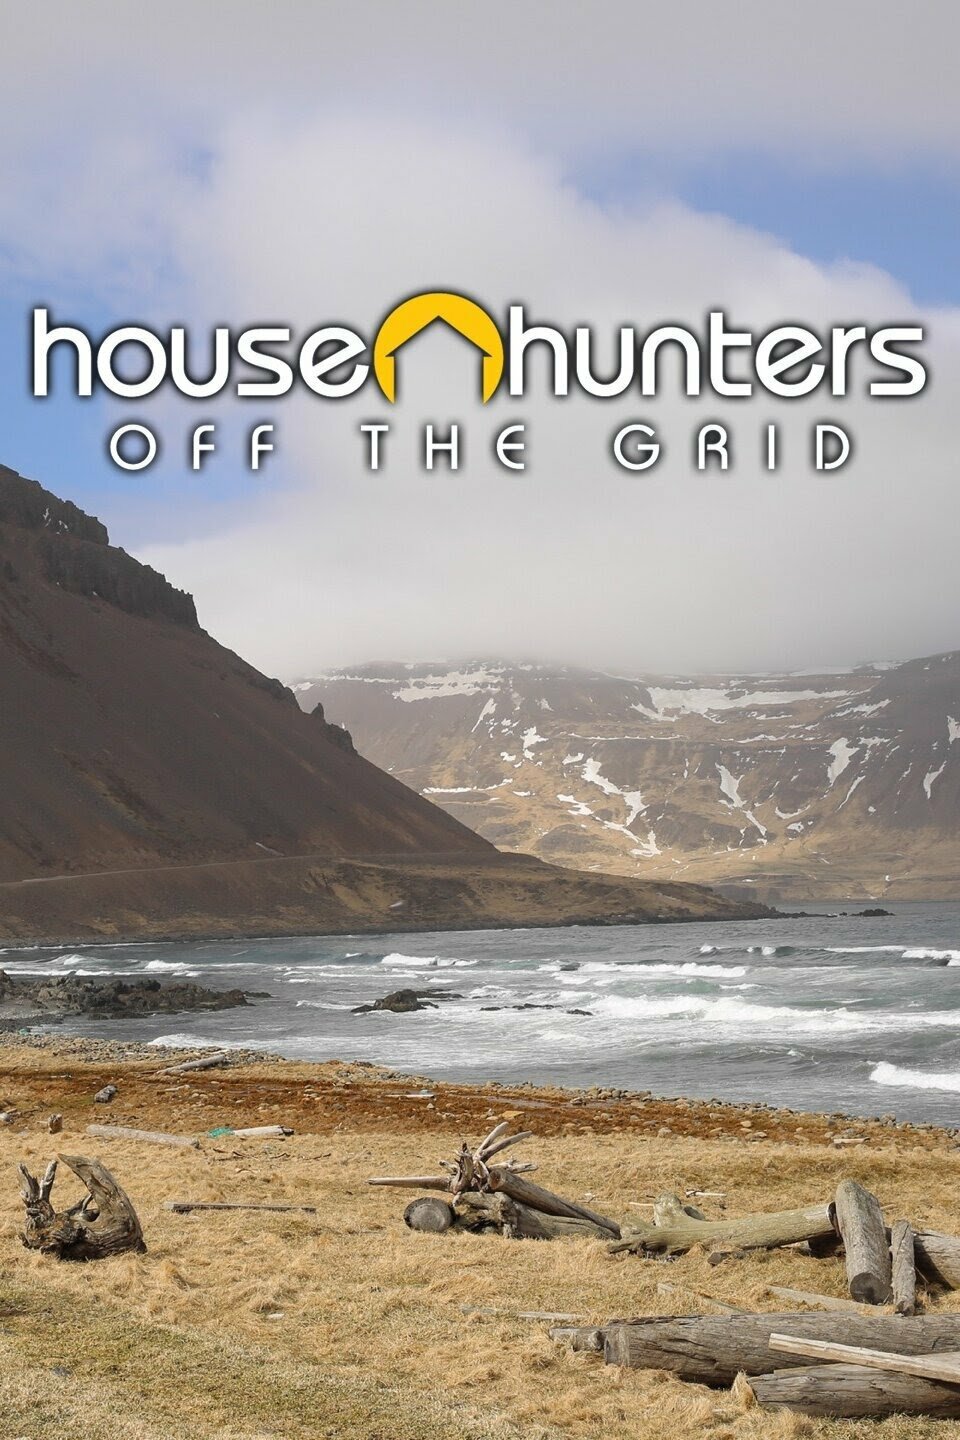 House Hunters Off the Grid ne zaman